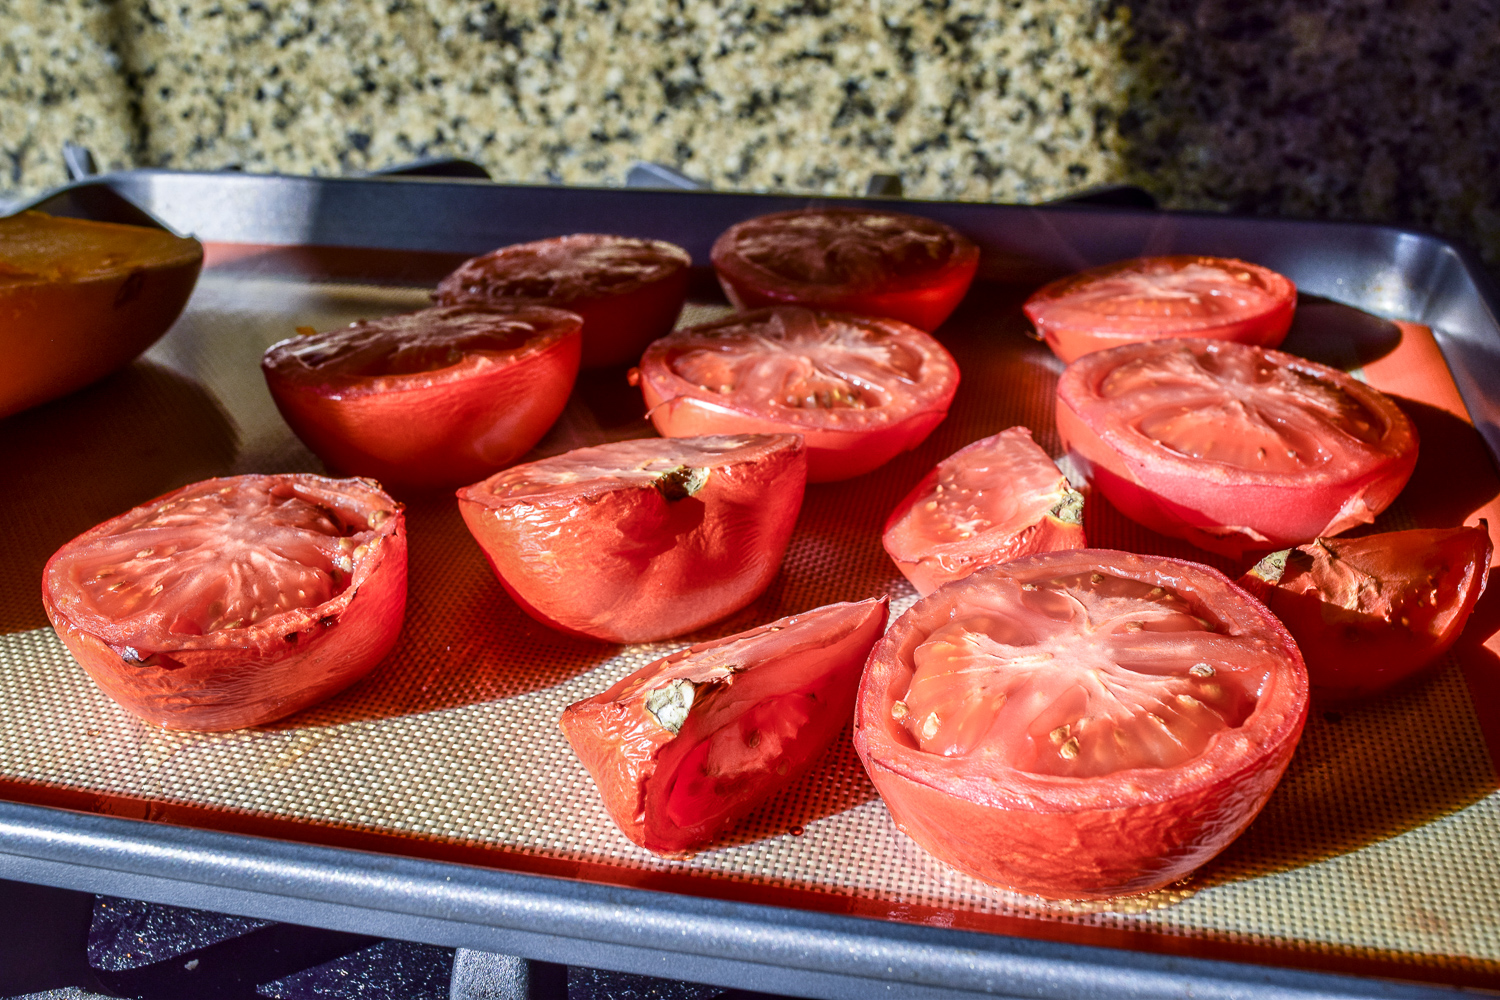 Oven roasted tomatoes for Egg-White Chili Shakshuka